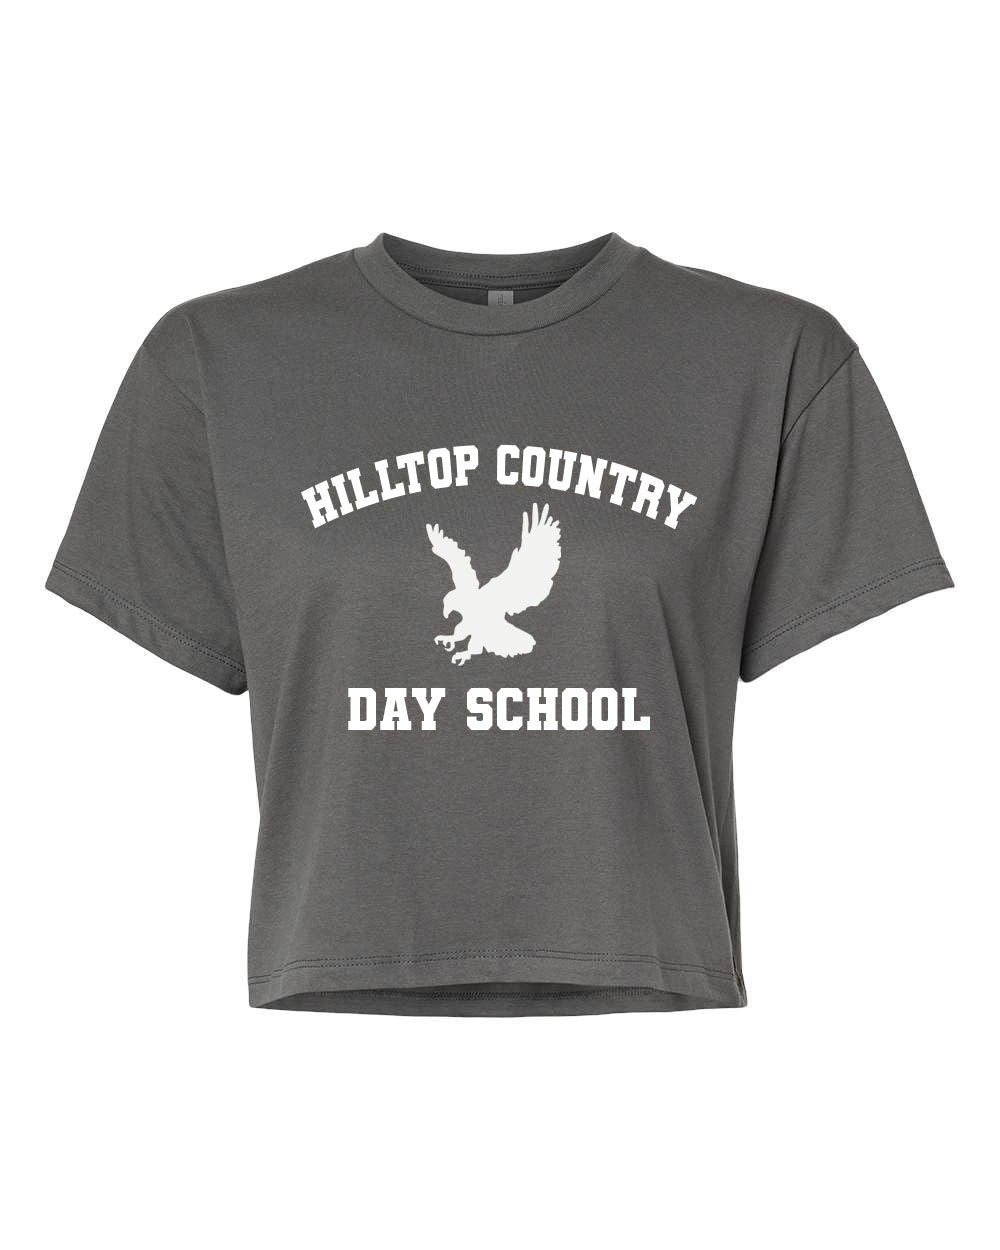 Hilltop Country Day School Design 1 crop top